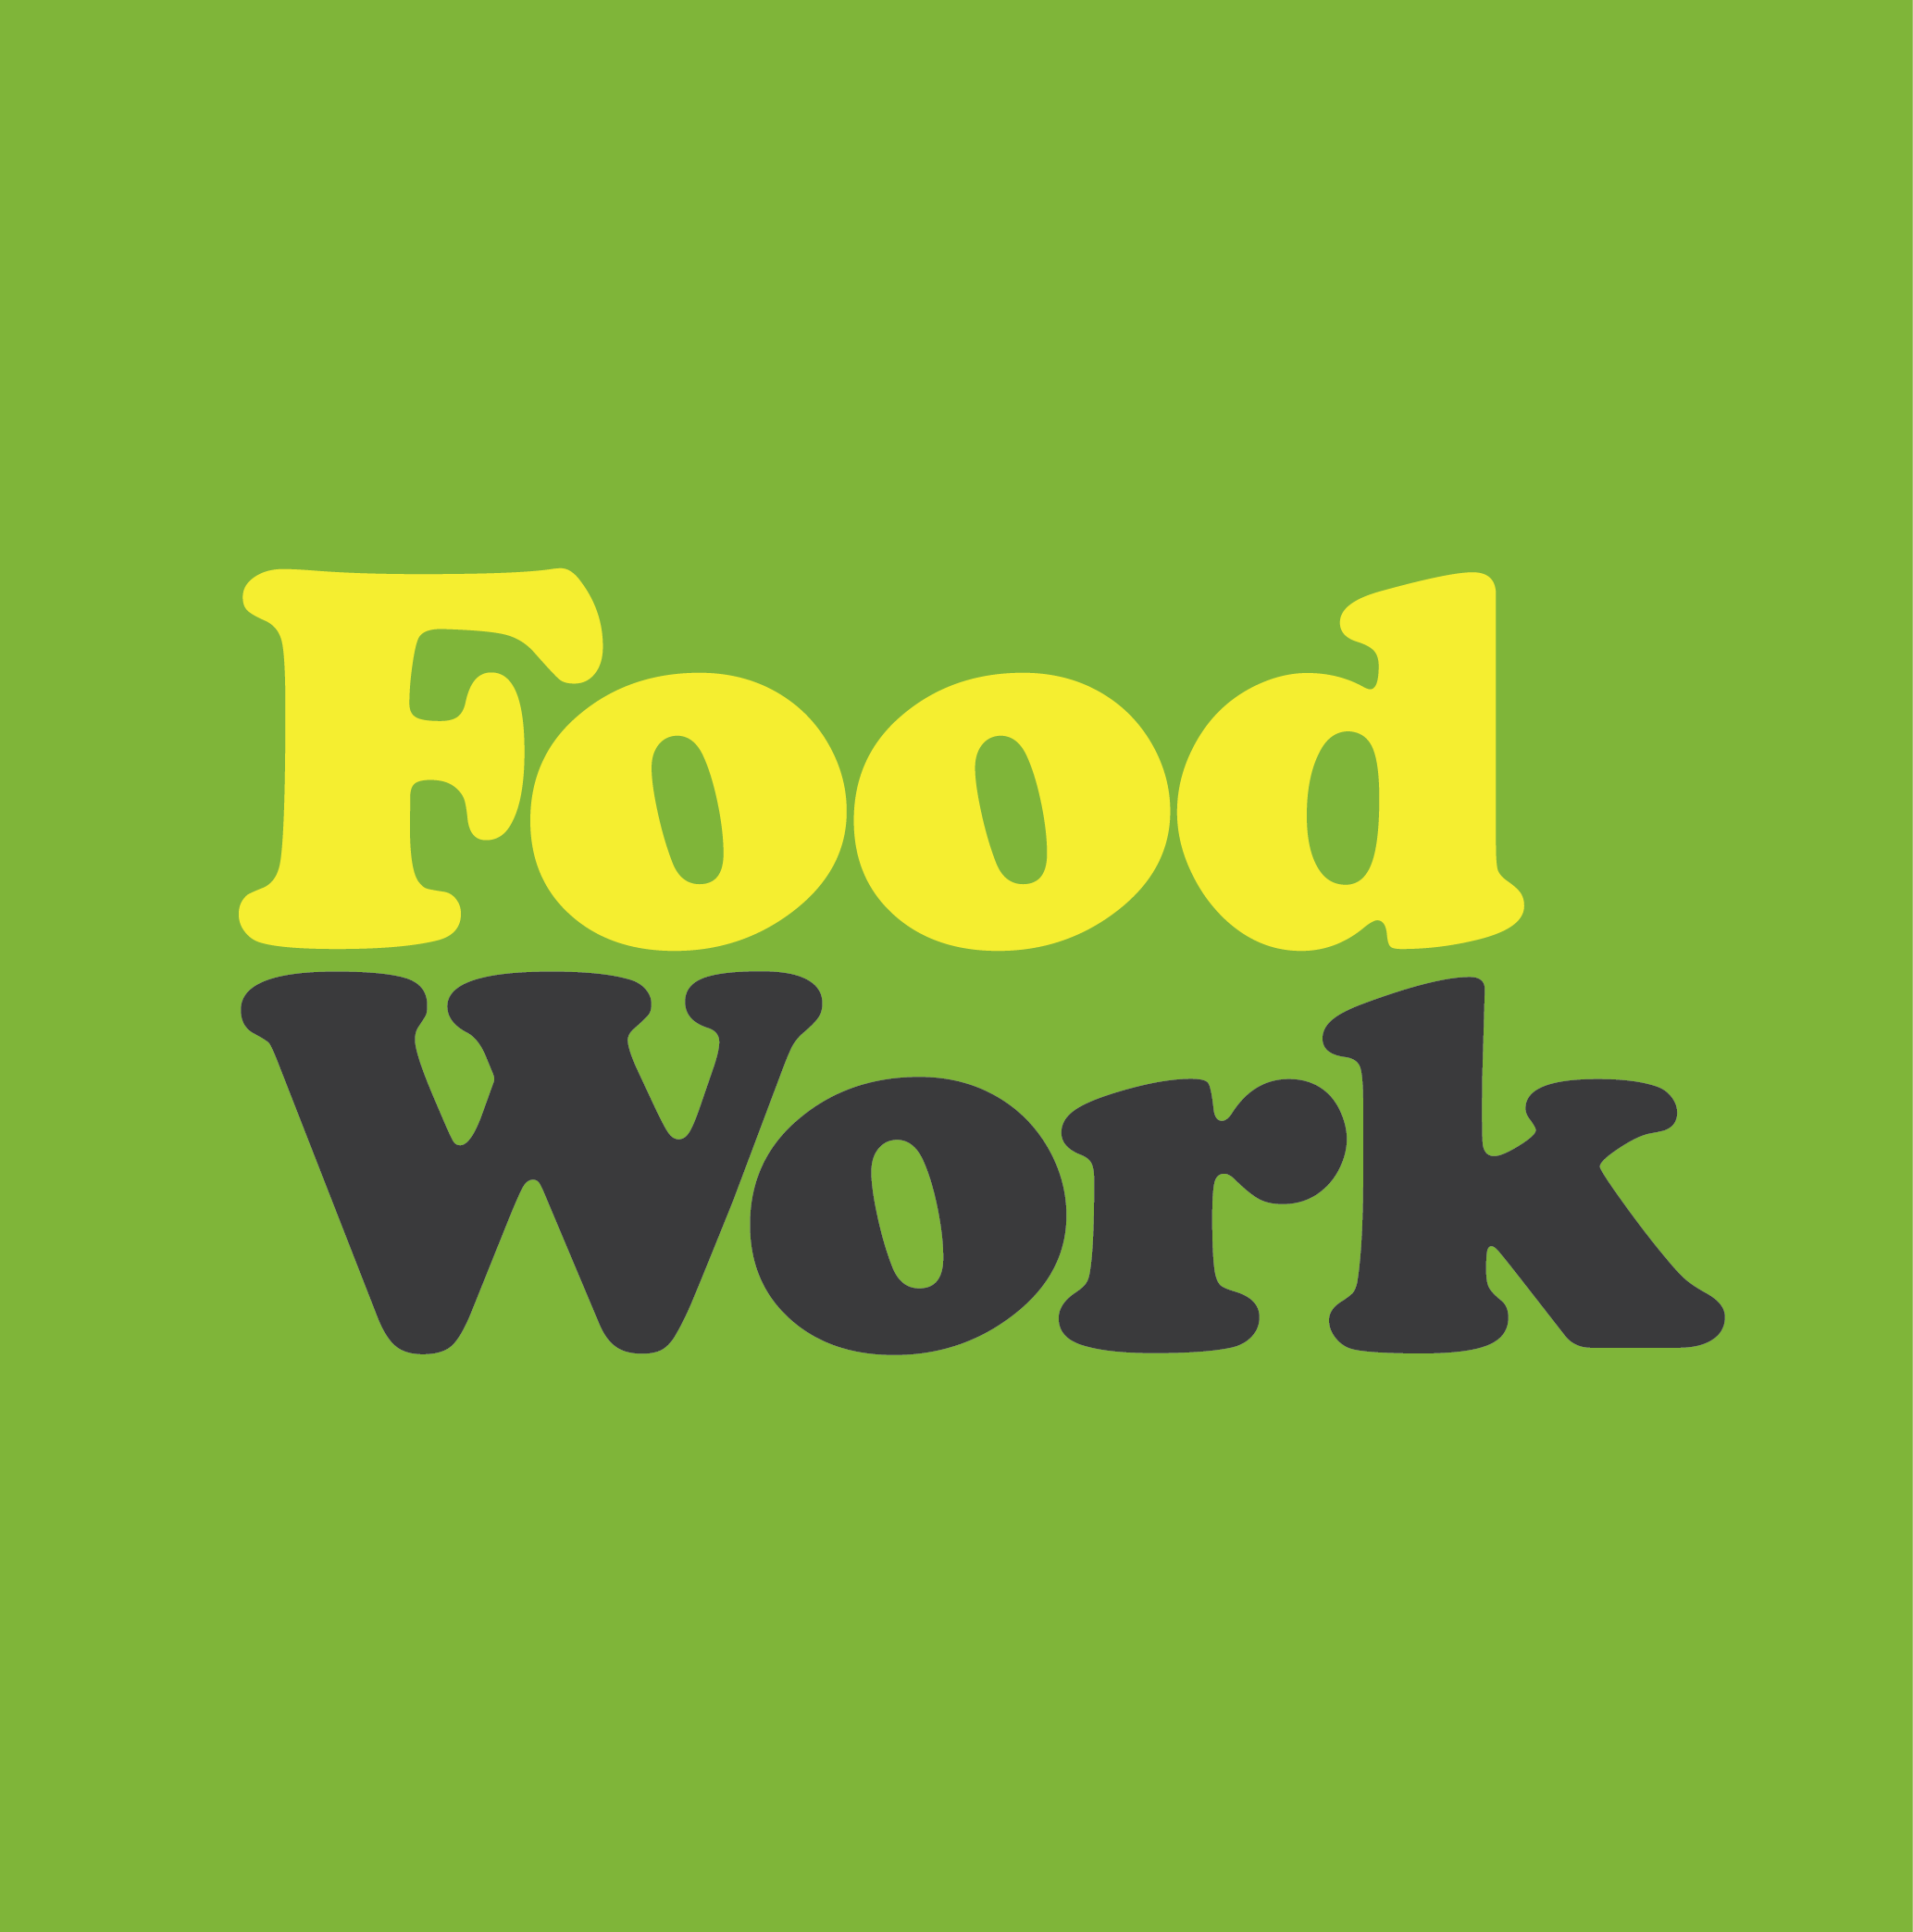 Local and organic food jobs: FoodWork.ca